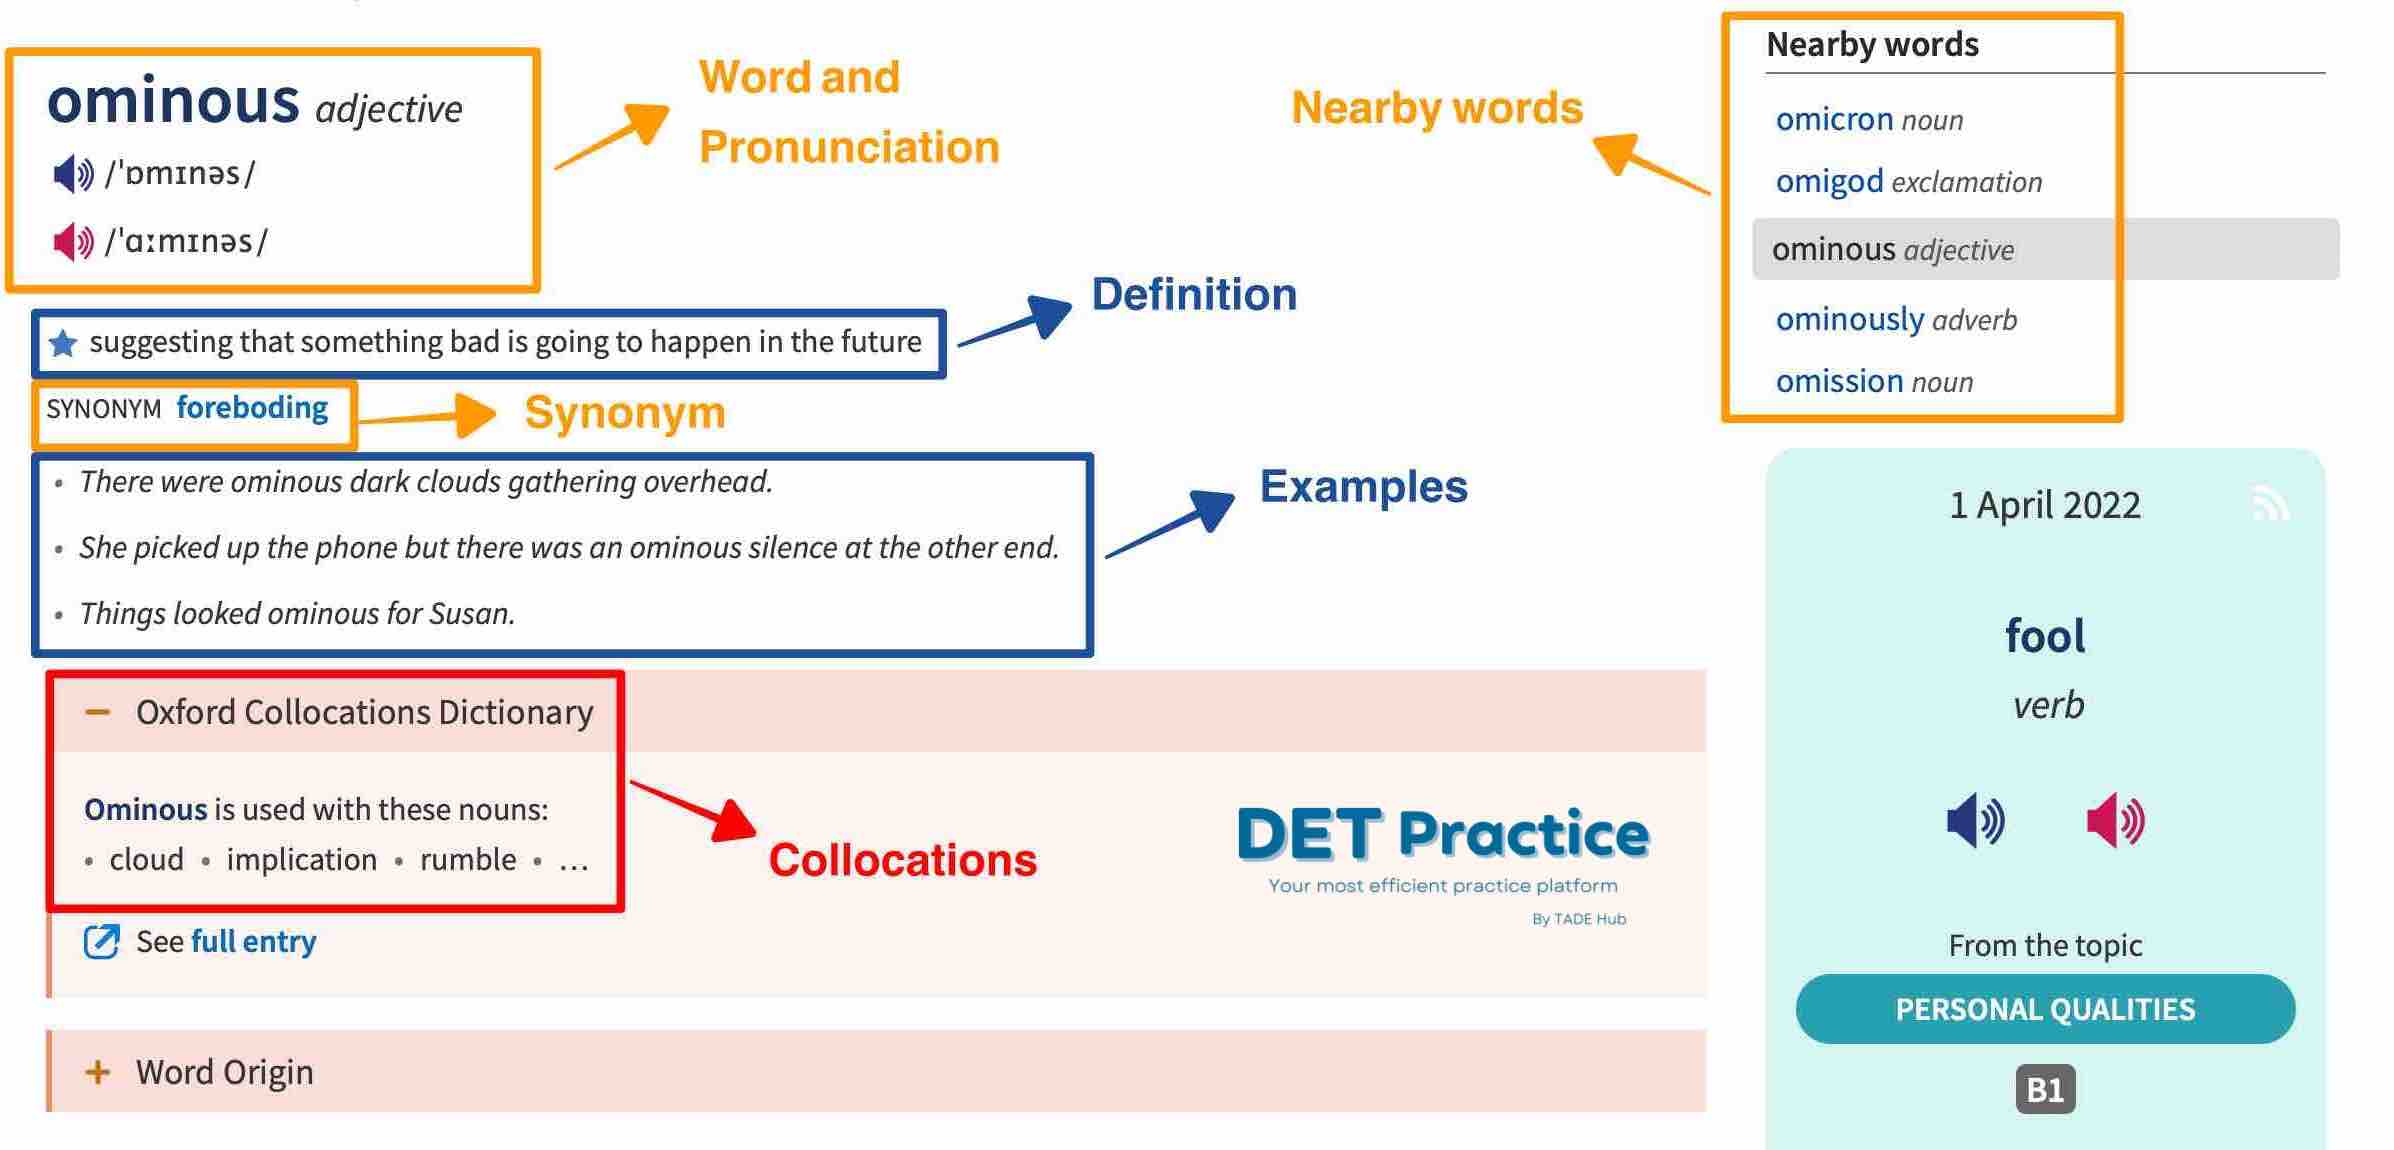 Oxford dictionary duolingo test, det practice platform, Duolingo Test preparation, new words